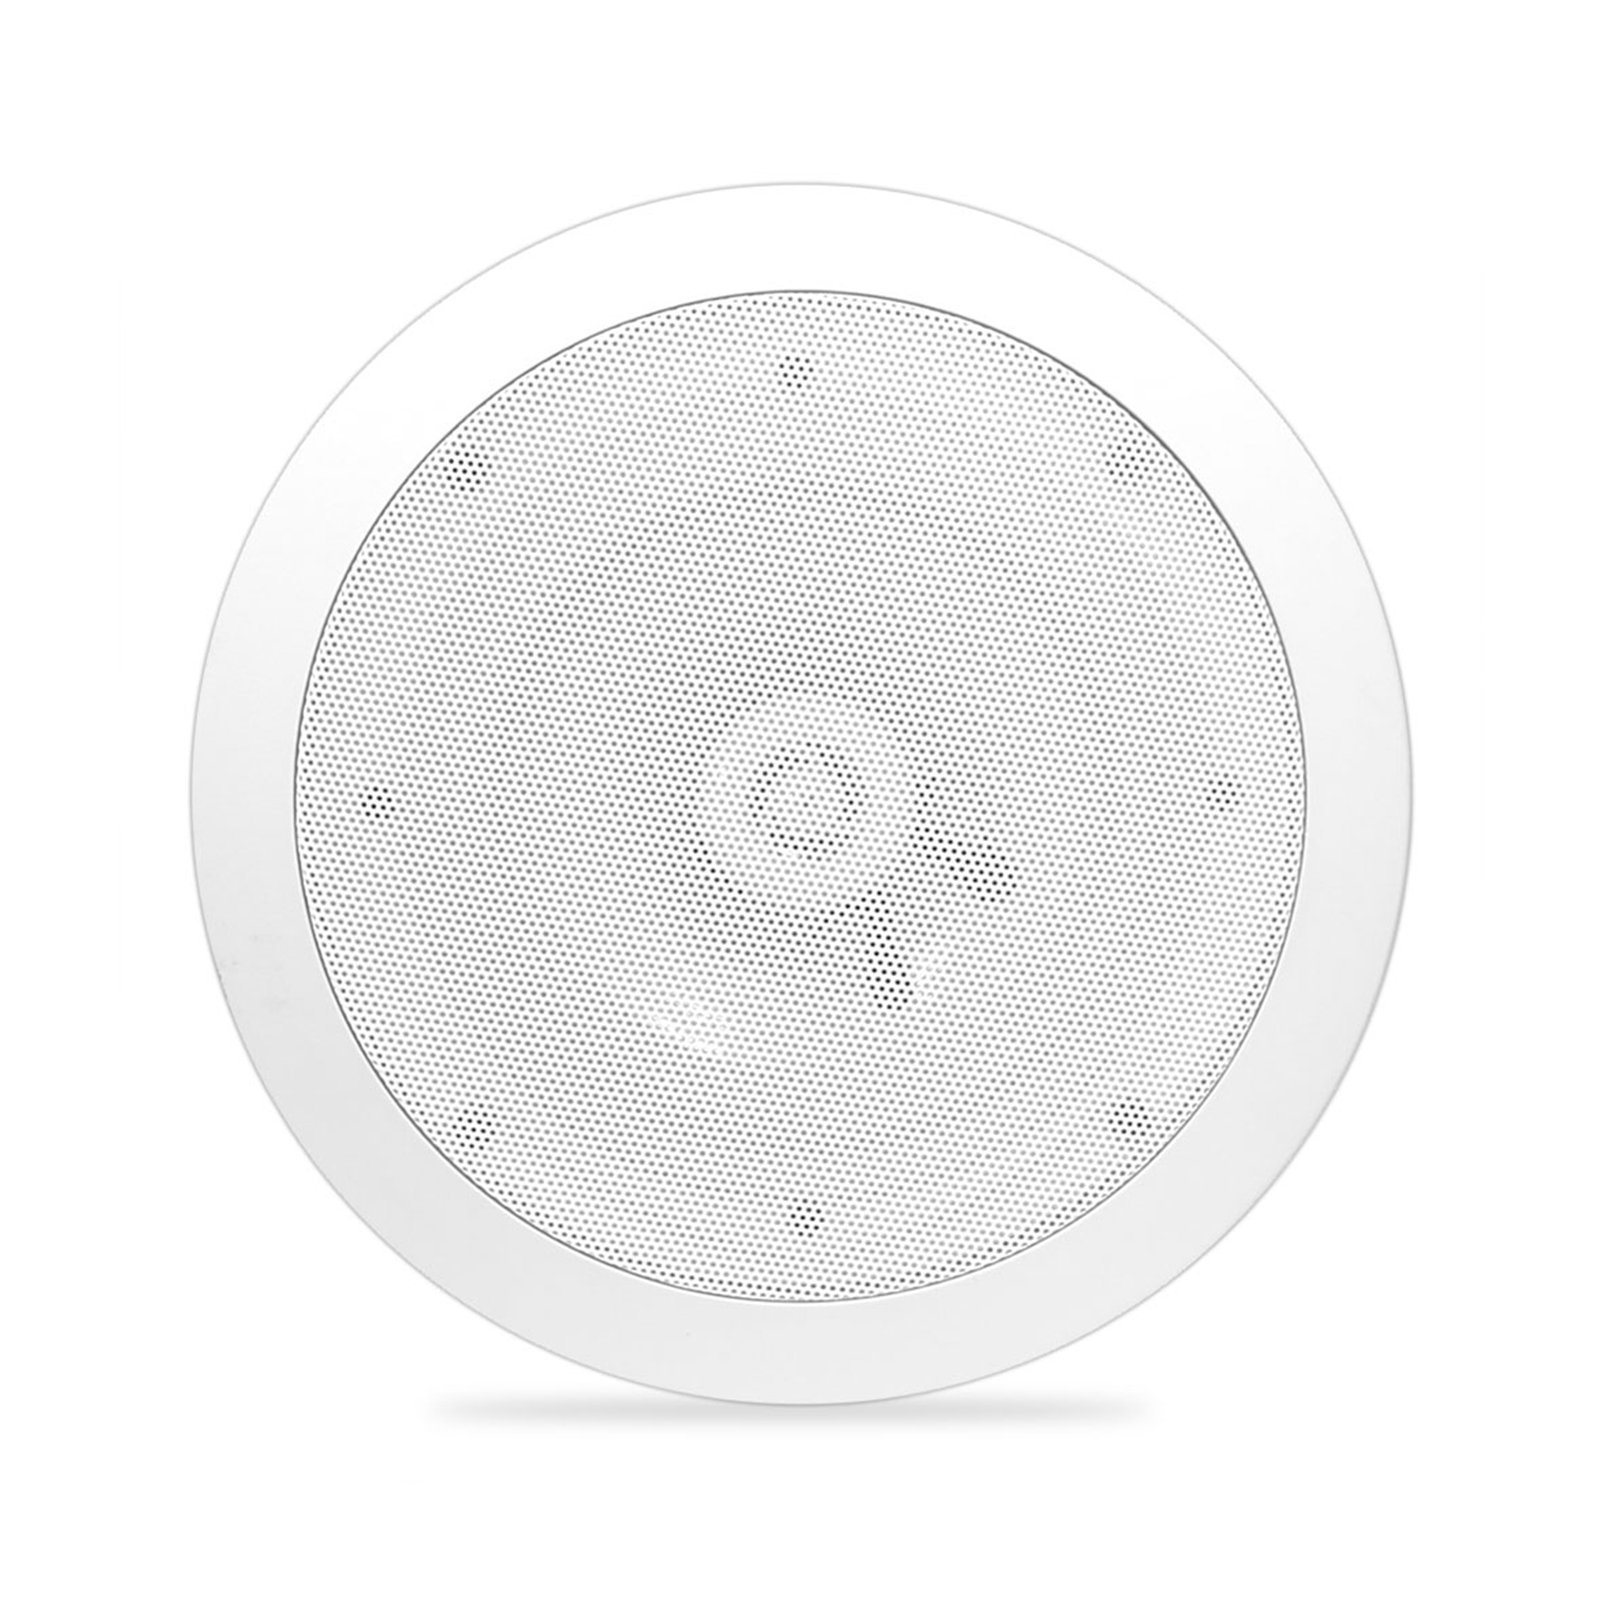 Pyle 6.5 Inch 300W 2-Way Indoor/Outdoor Waterproof Ceiling Speaker, White (Pair) - image 1 of 4